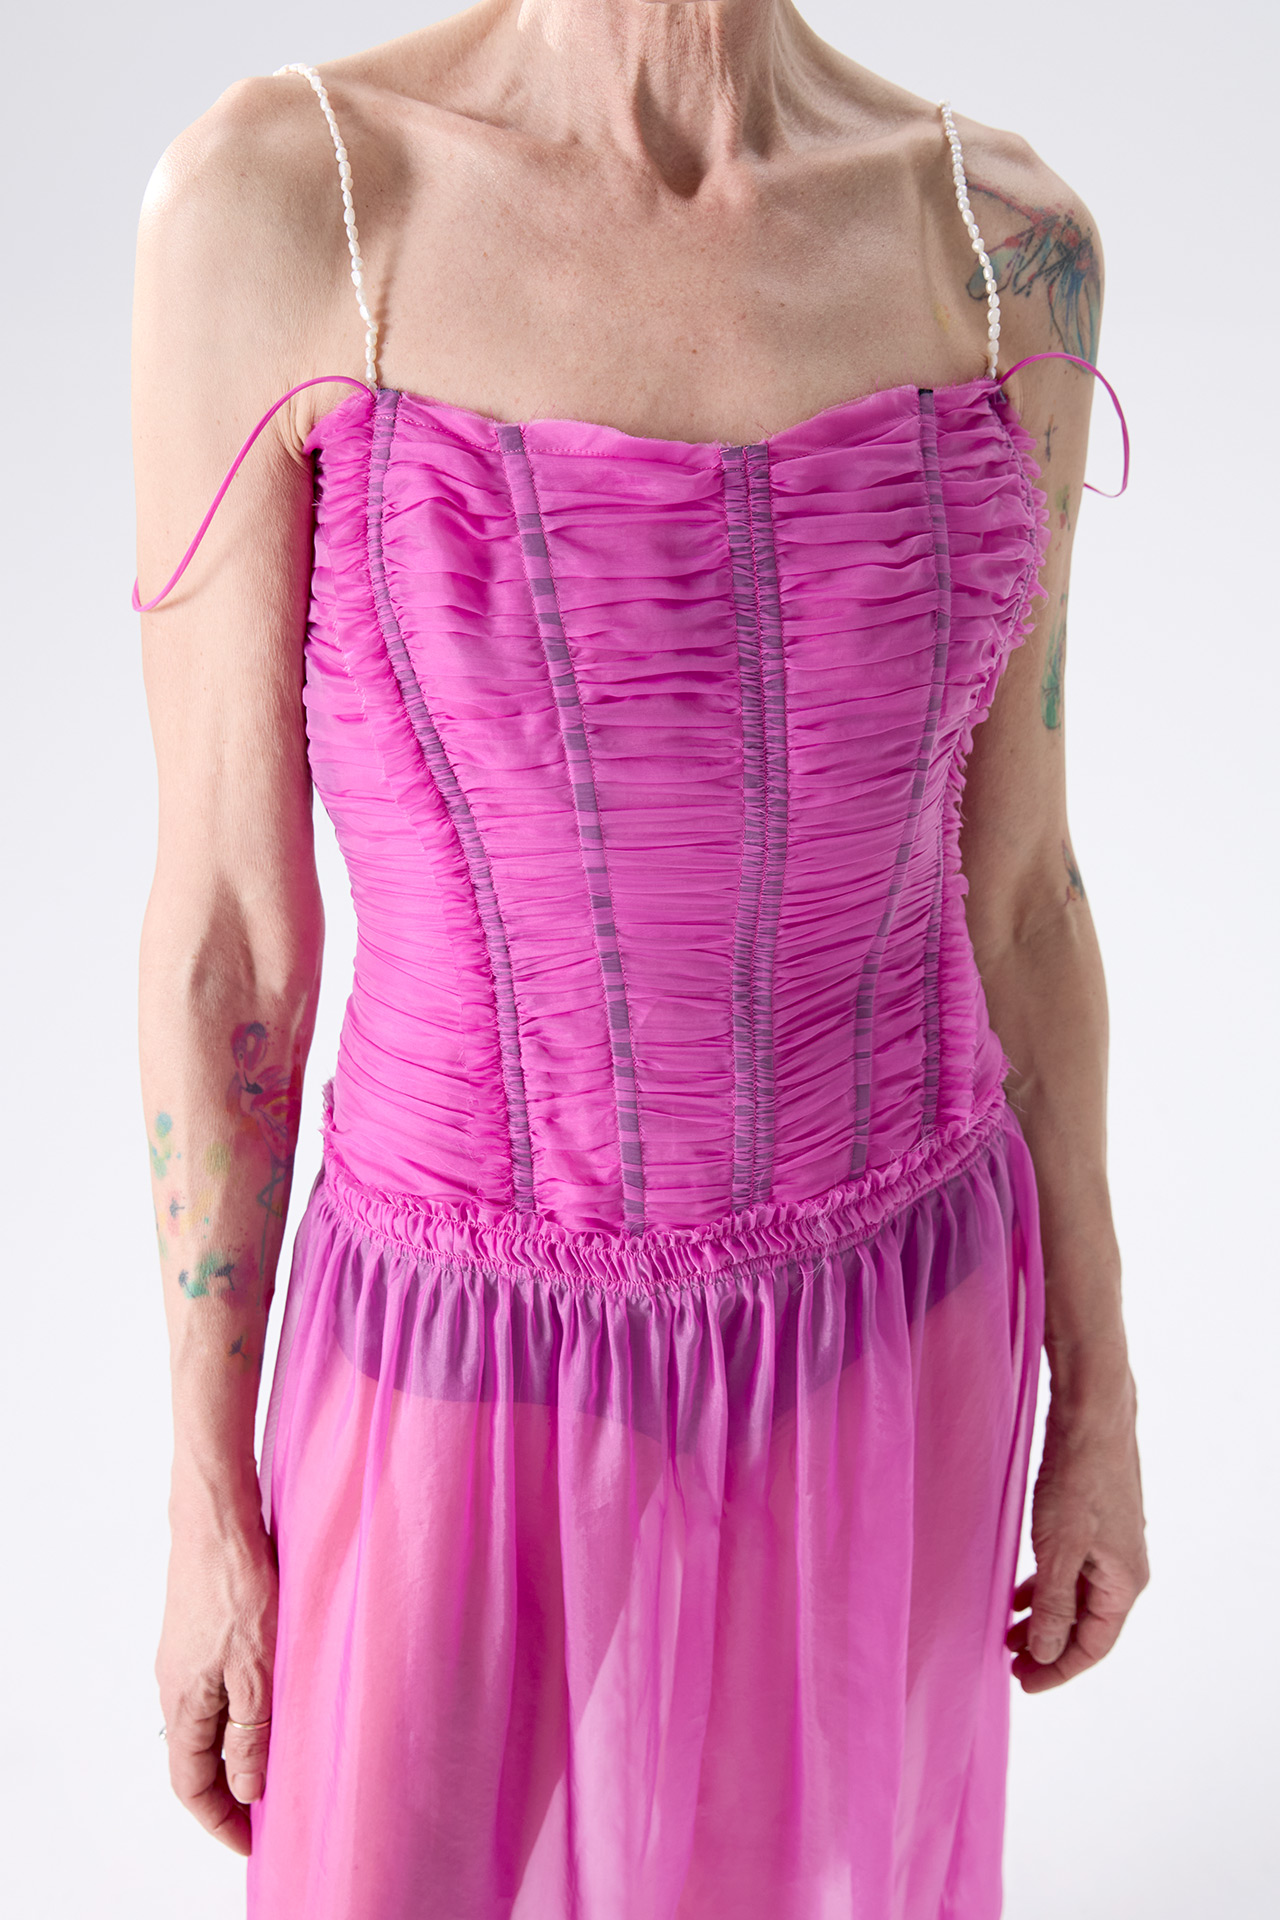 | Europe | Miista Spain Made Pink in Franca Dress